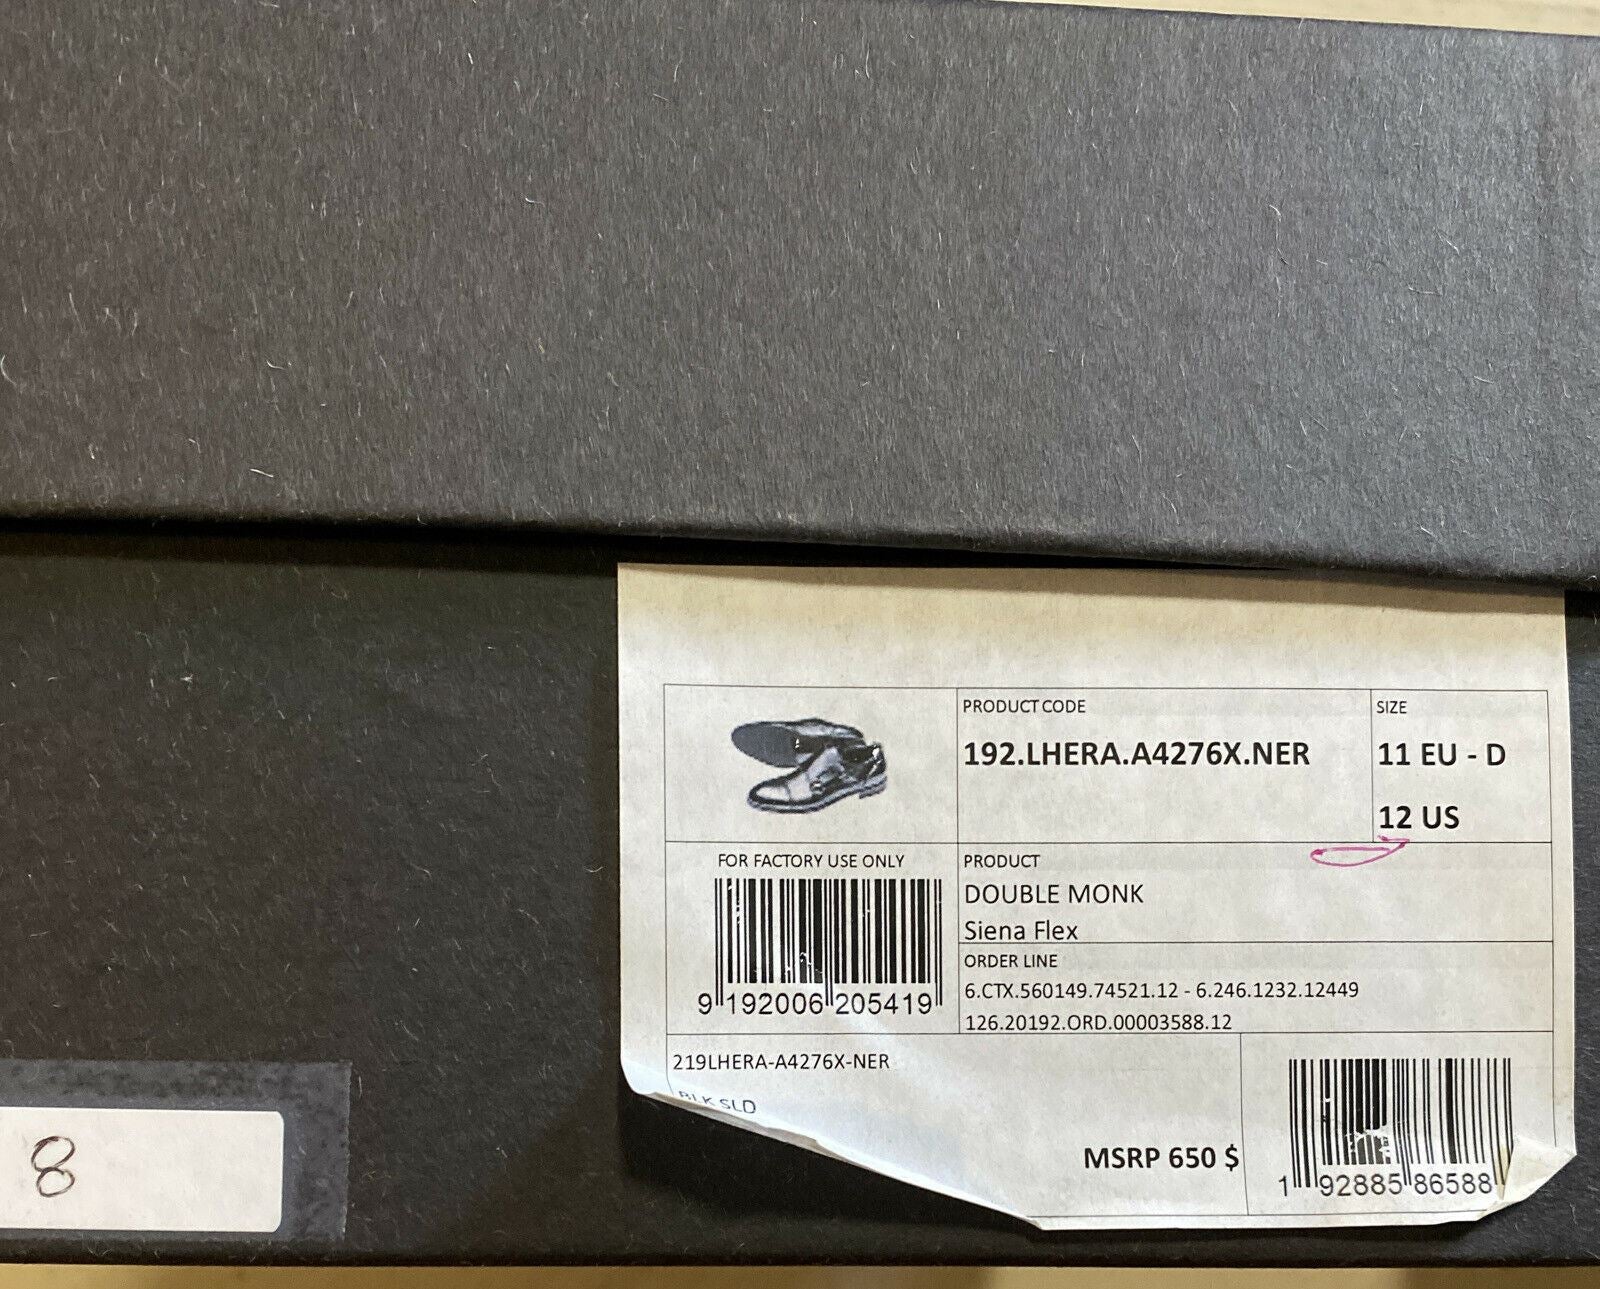 New $650 Ermenegildo Zegna Double Monk Leather Shoes Black 12 US Italy